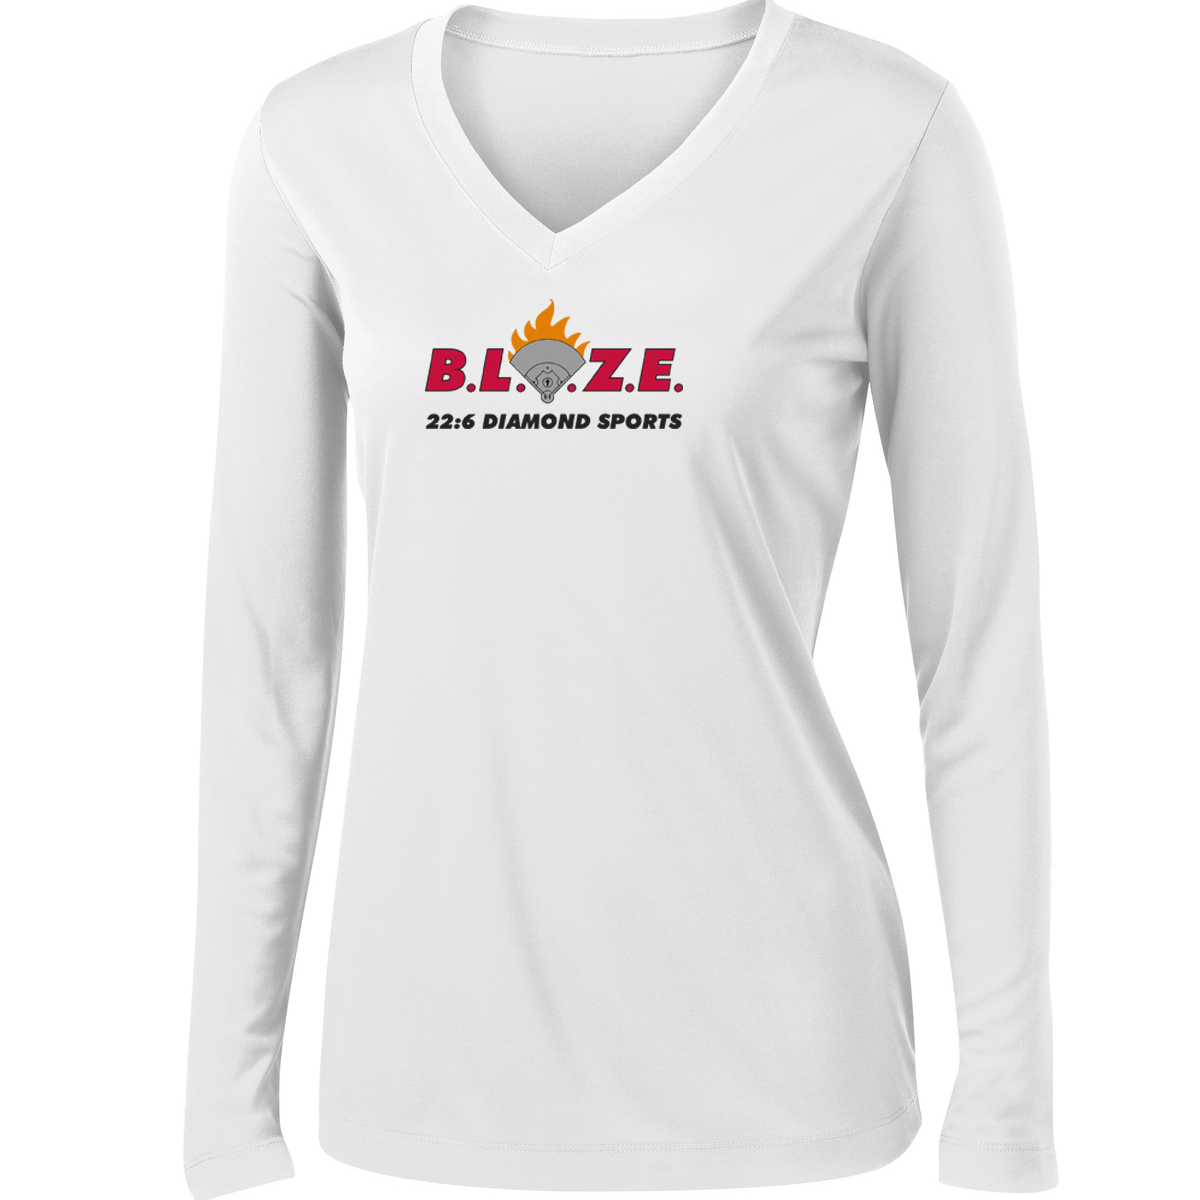 BLAZE 22:6 Diamond Sports Women's Long Sleeve Performance Shirt